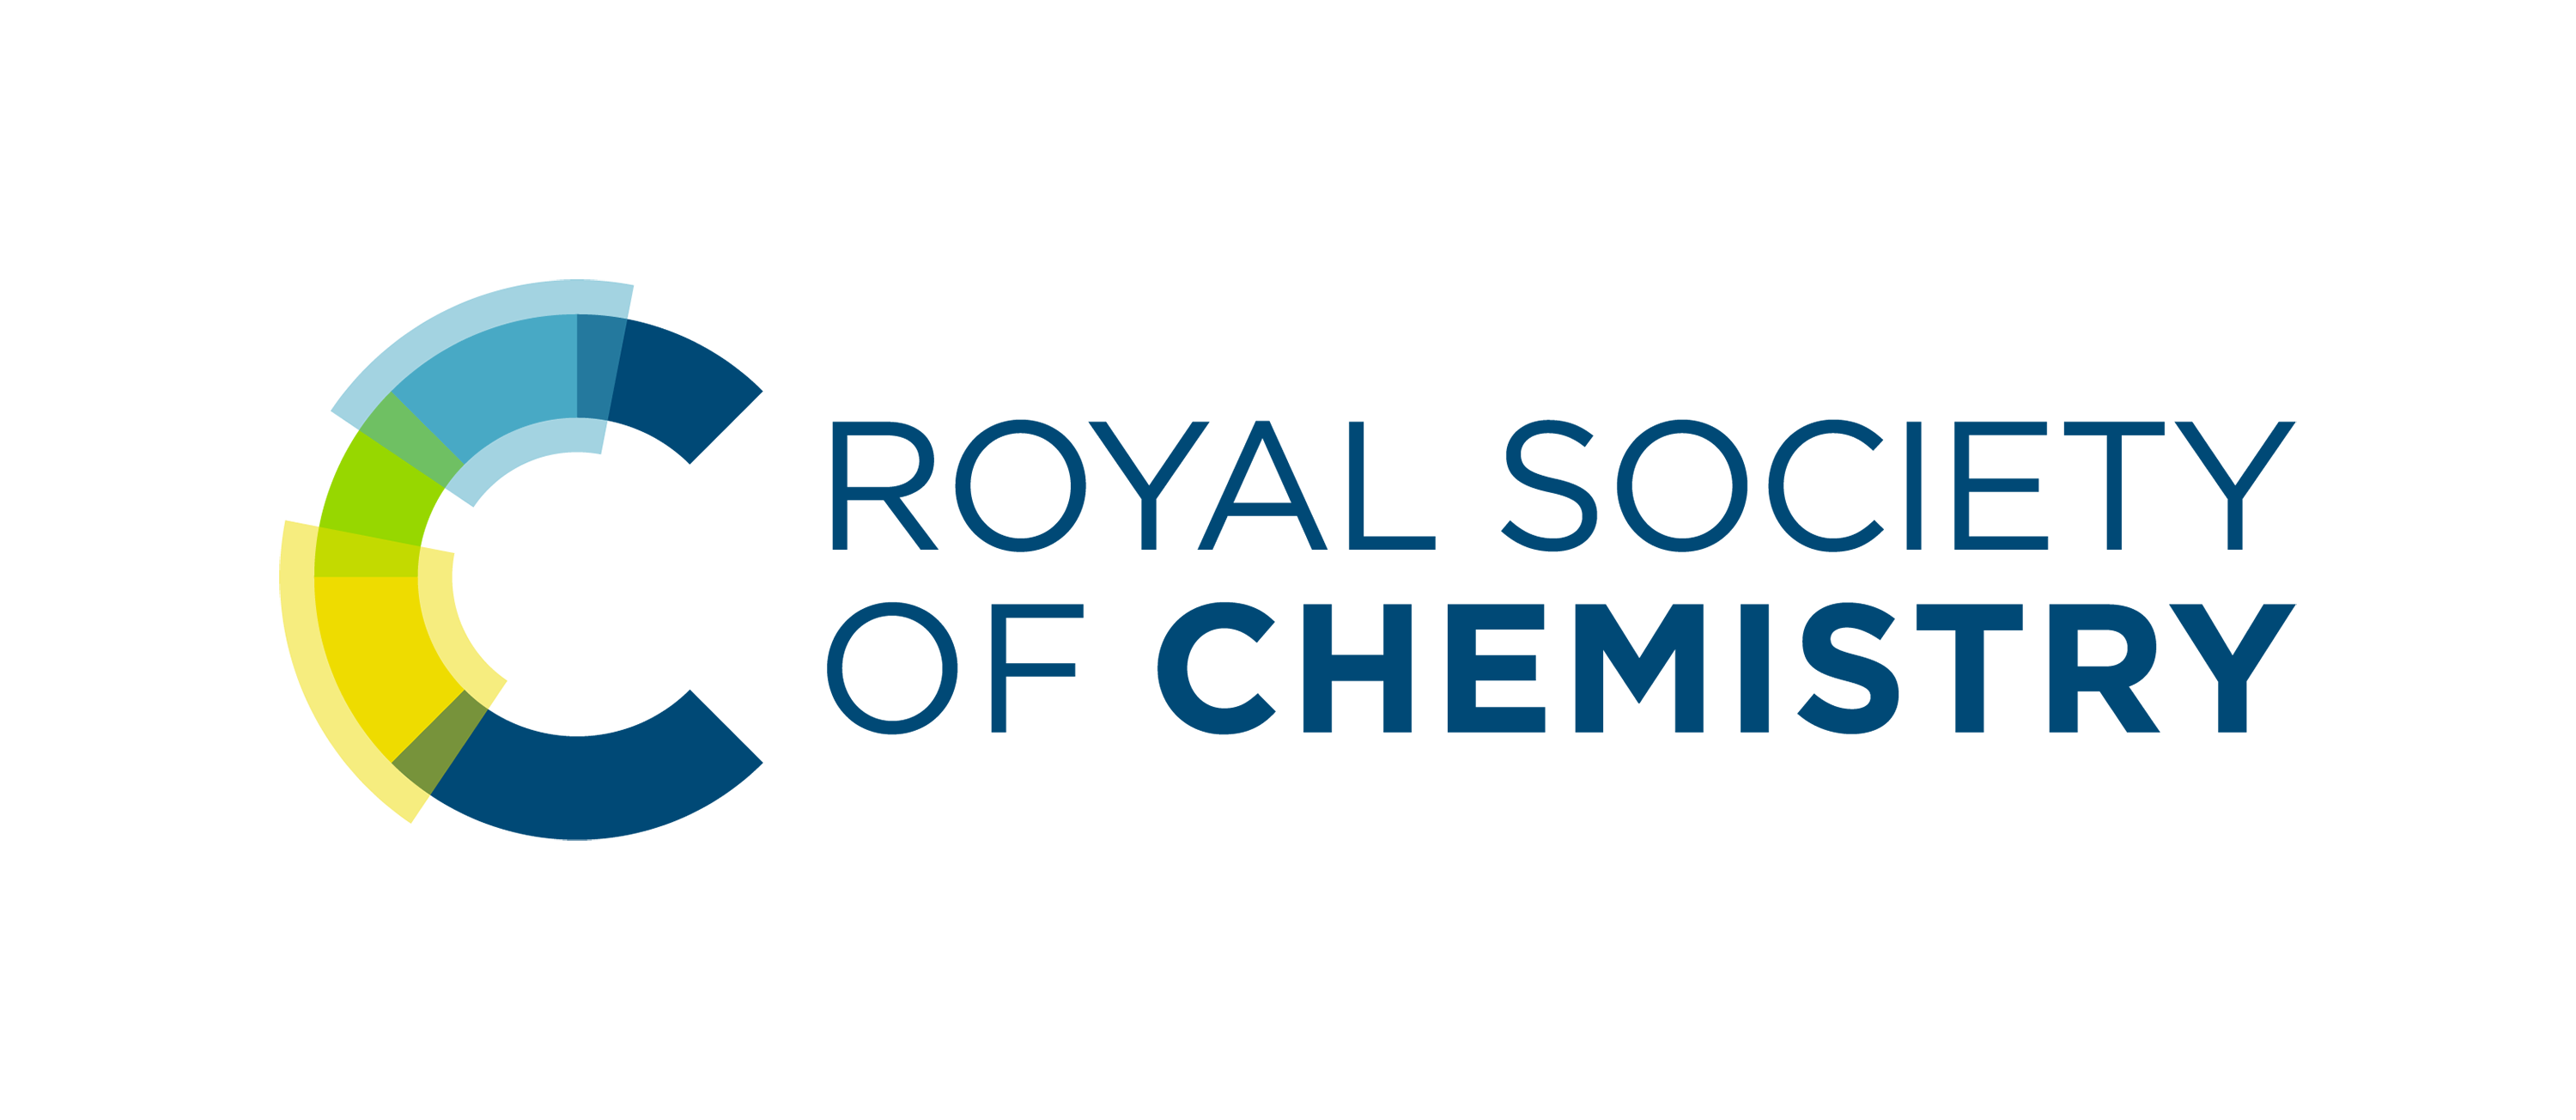 Royal Society of Chemistry logo (colour)